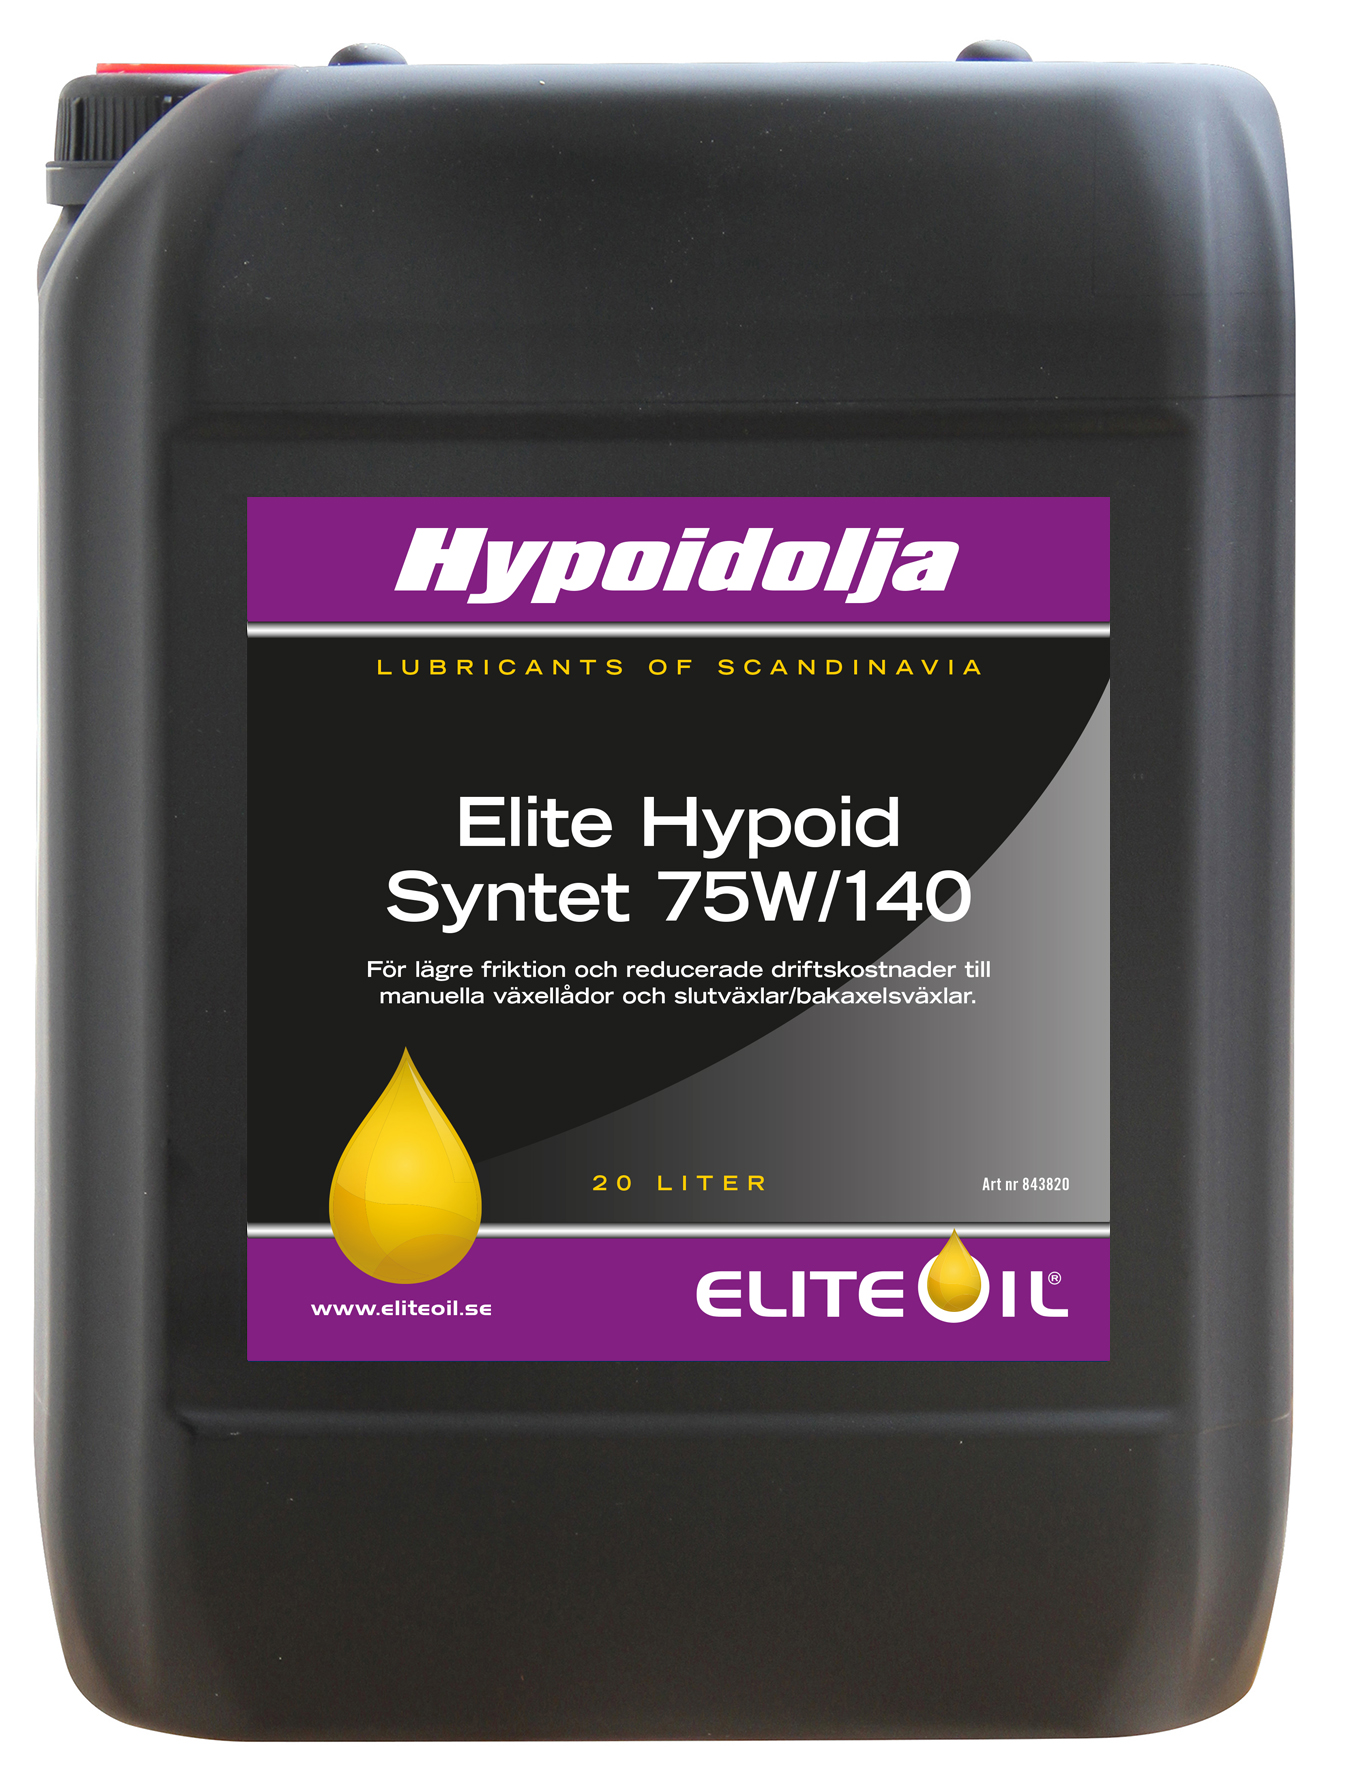 Elite Hypoid Syntet, 75W/140, 20 liter dunk-image